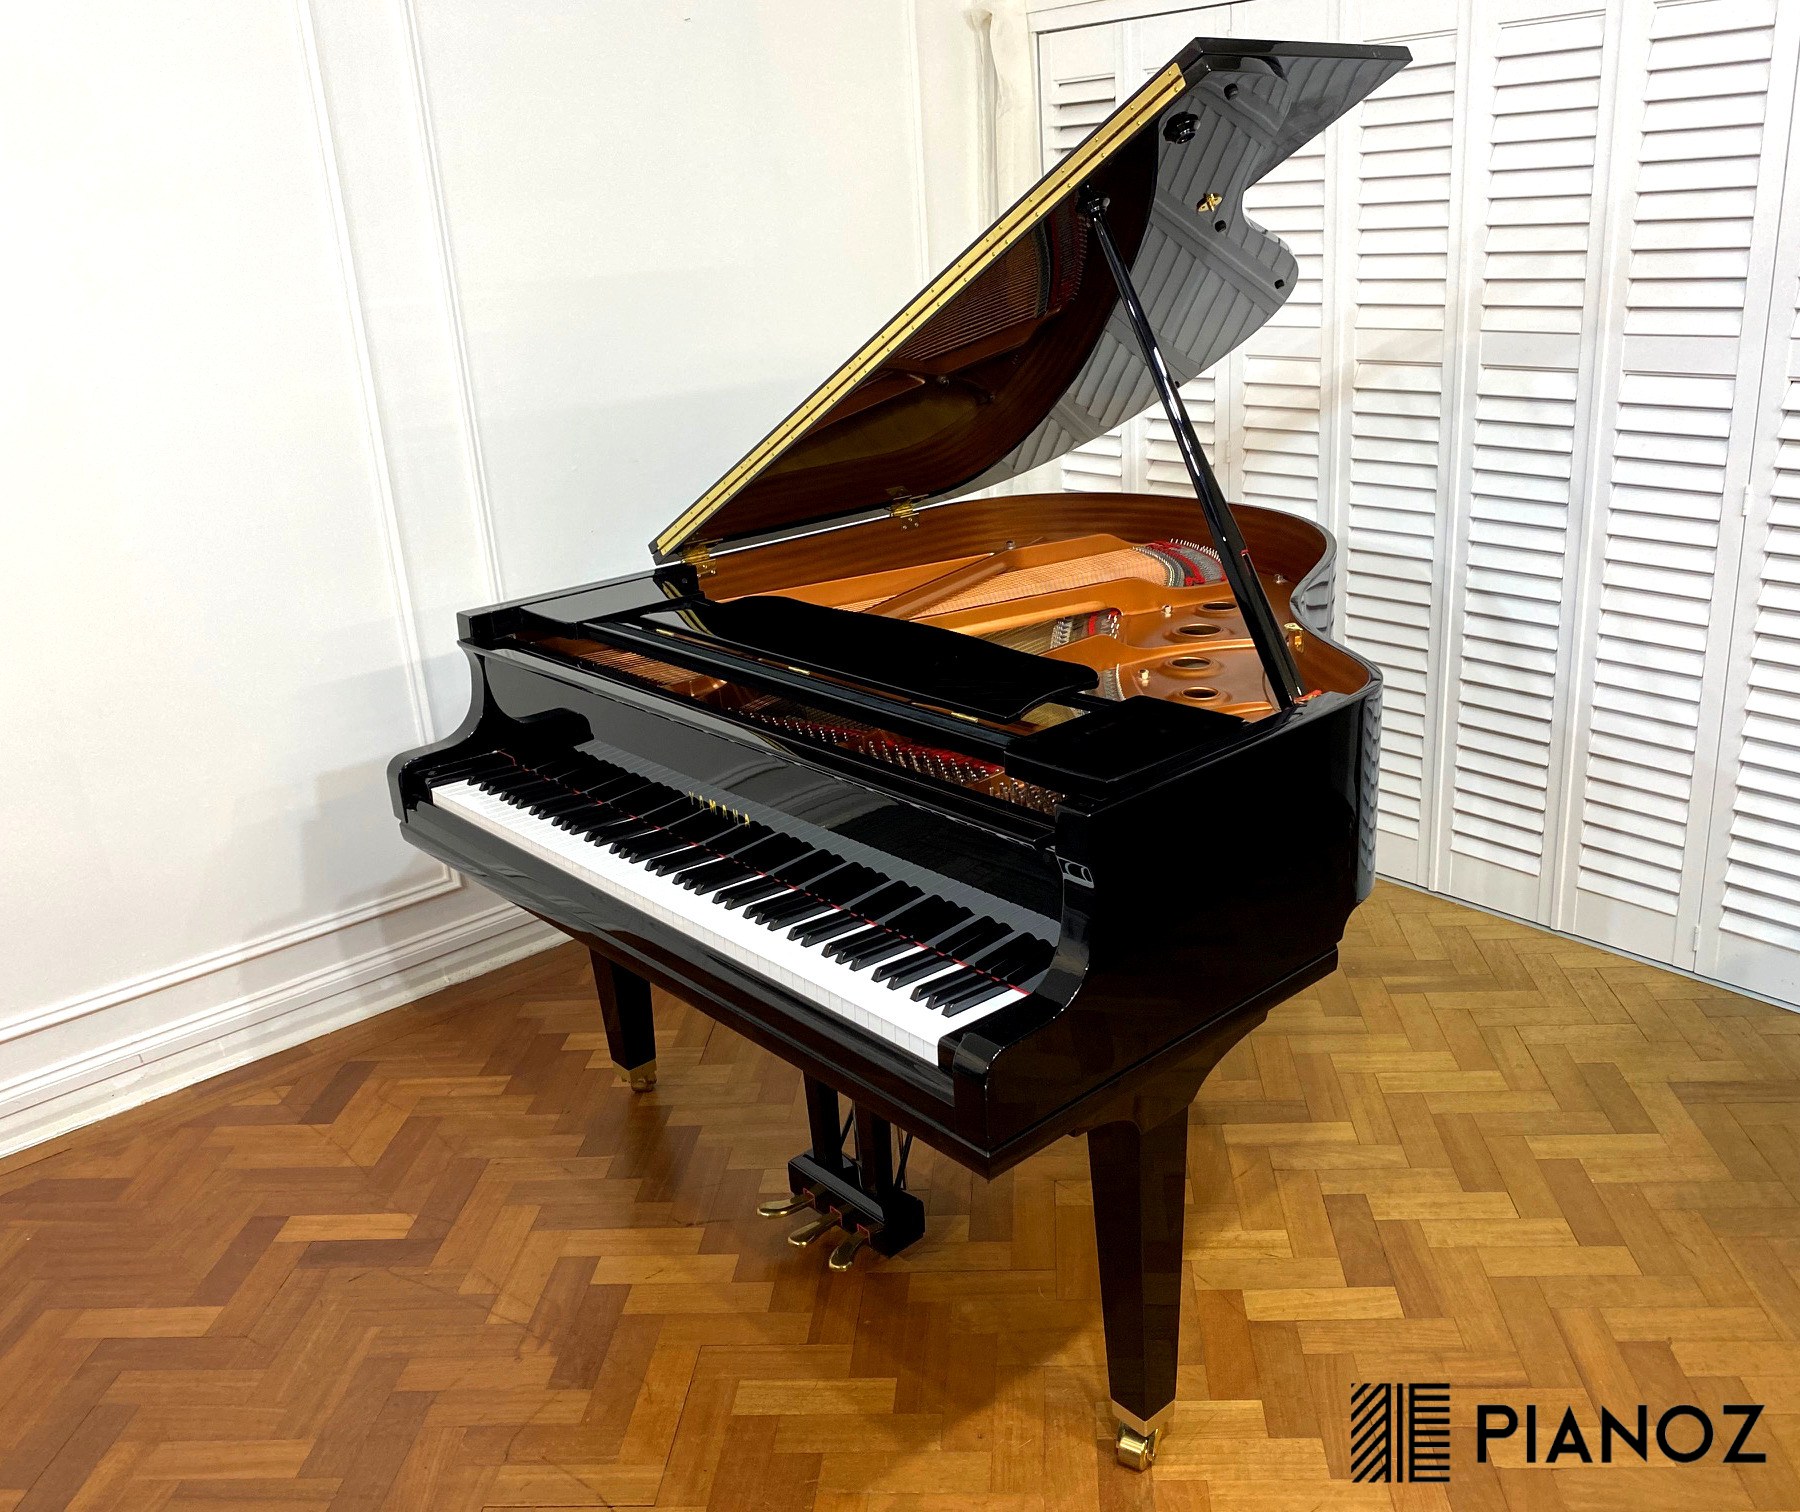 Yamaha GC1 Japanese Baby Grand Piano piano for sale in UK